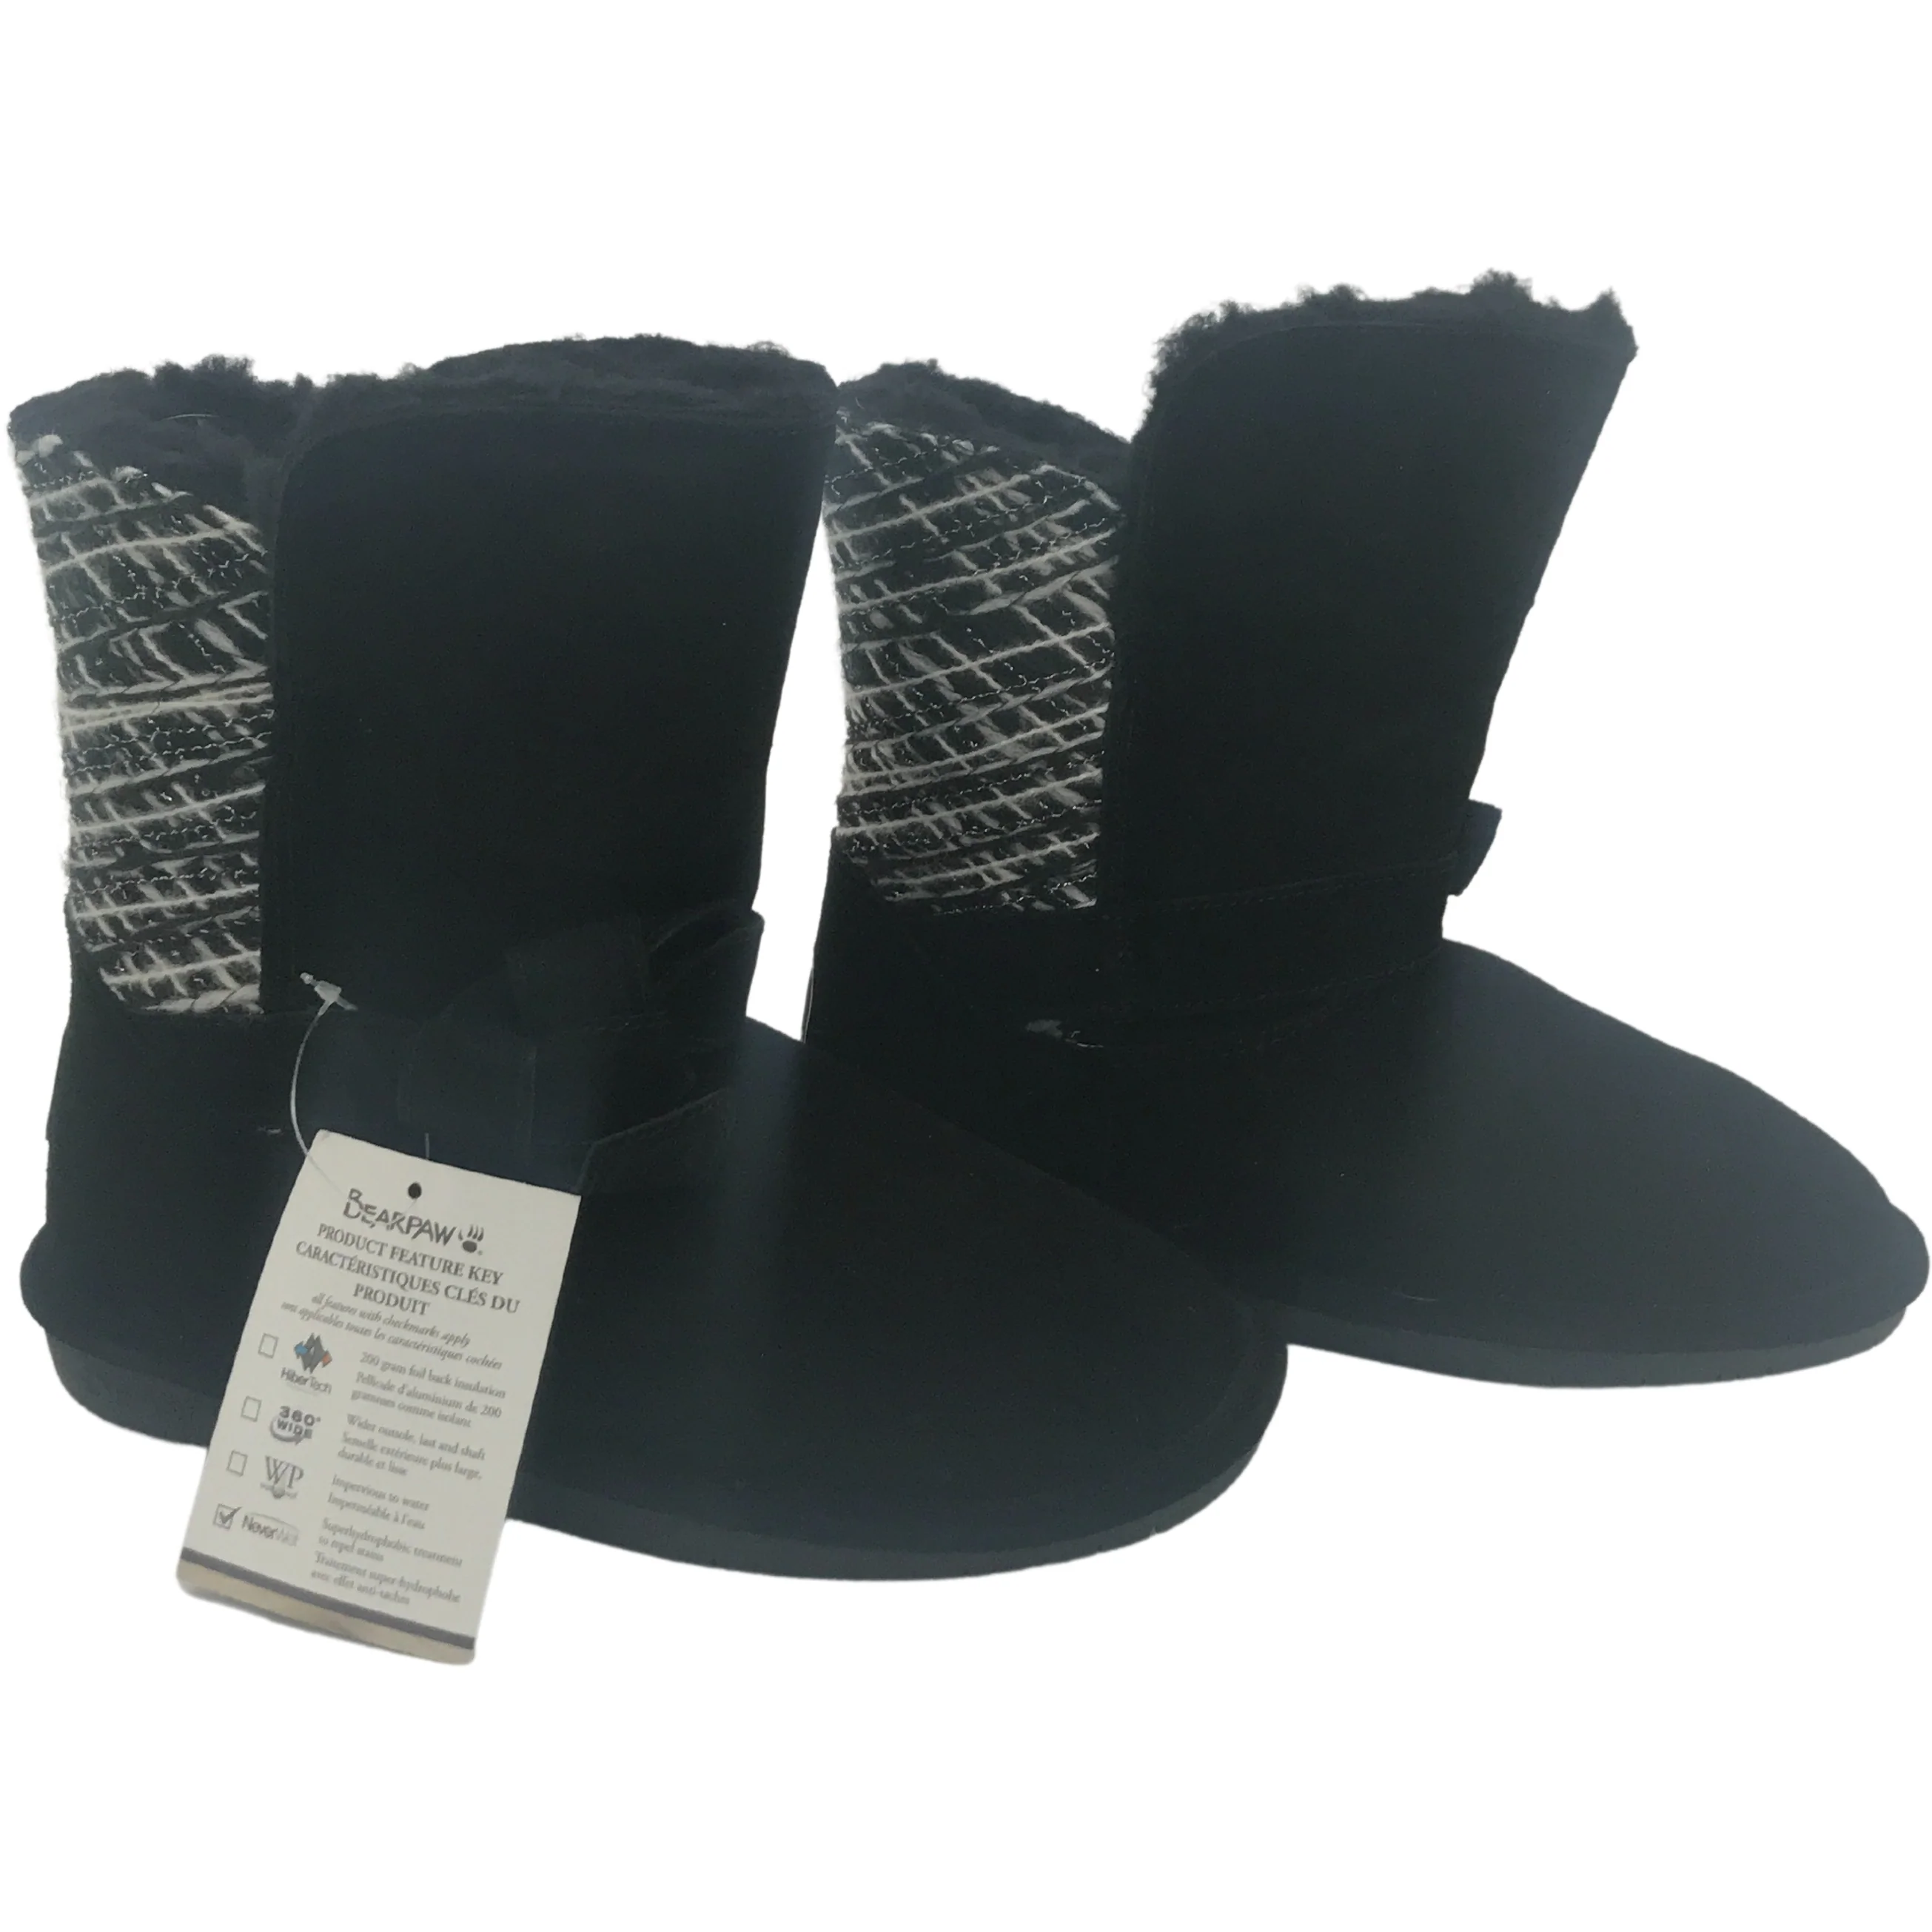 BearPaw Women's Winter Boot / Short Boot / Geneva Knitted Boot / Black / Size 8